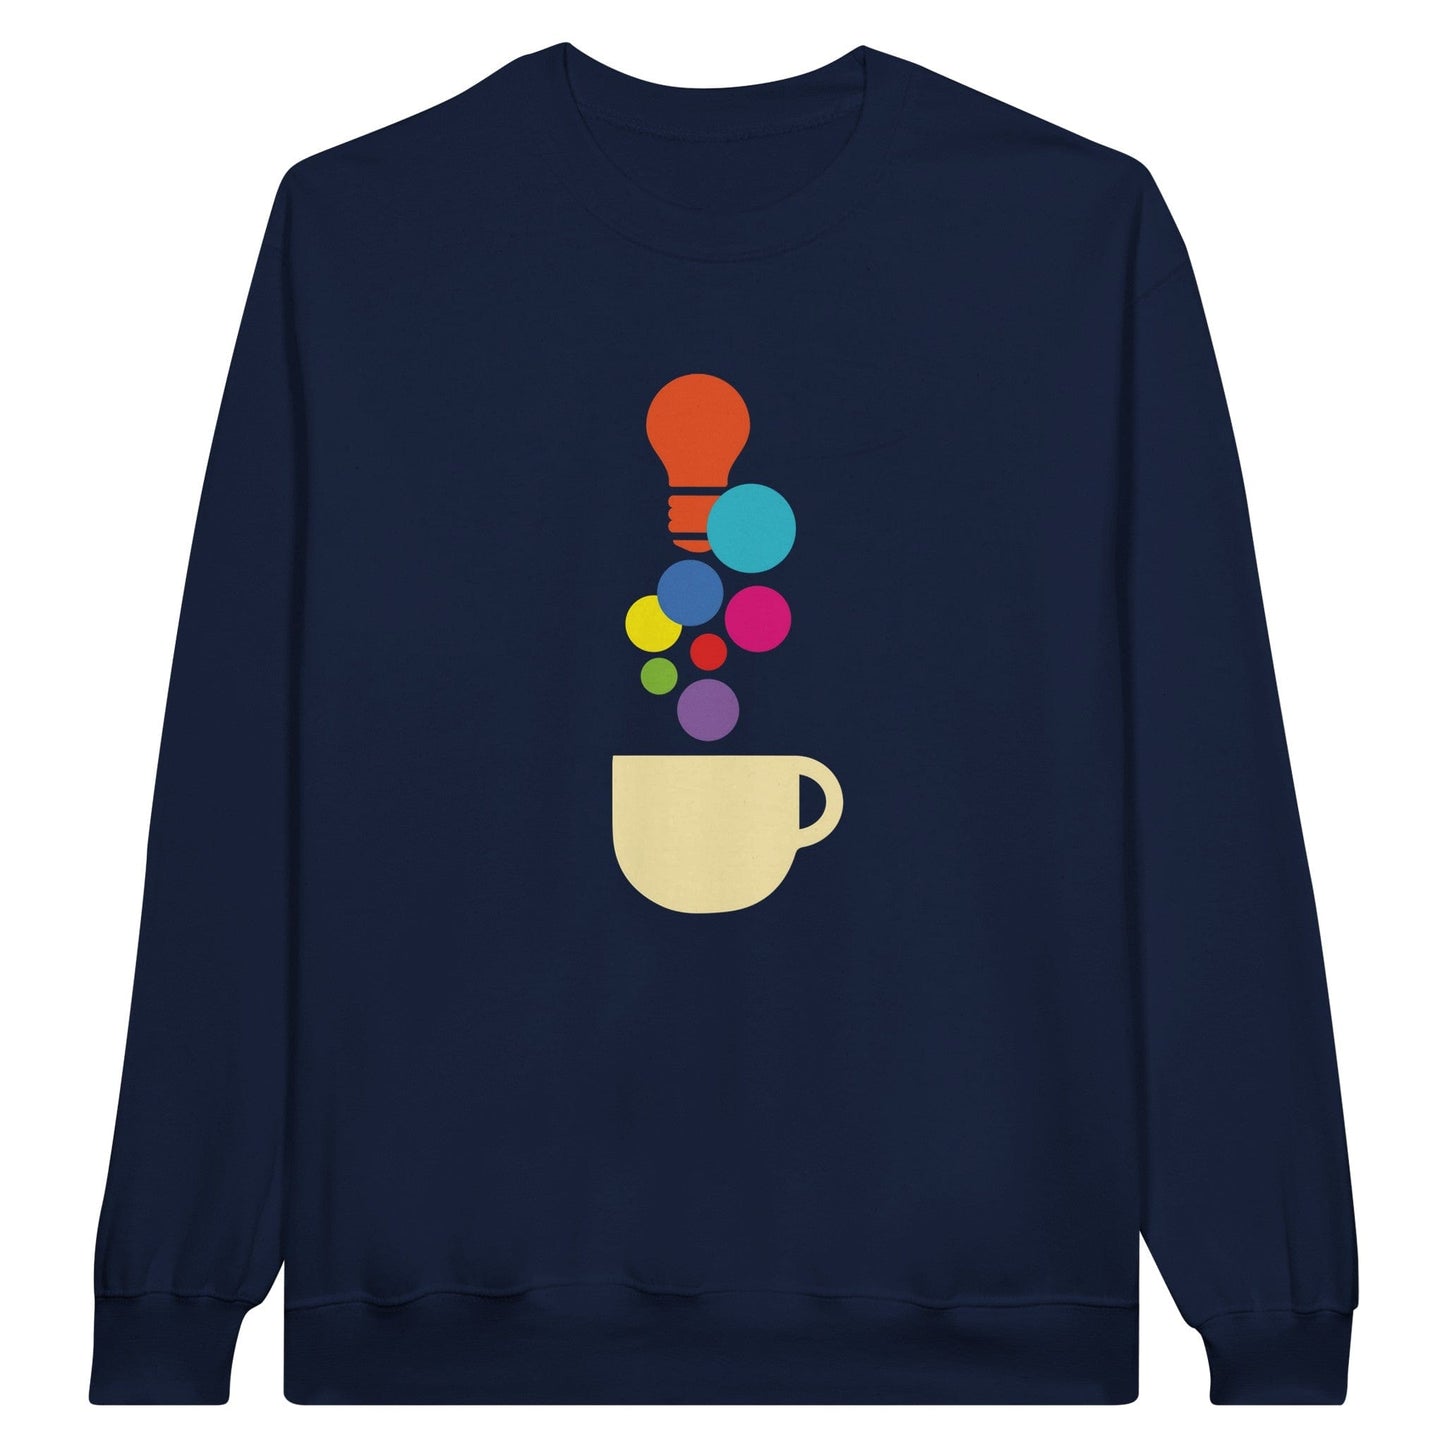 Good Bean Gifts "Creativity in a Cup" - Classic Unisex Crewneck Sweatshirt S / Navy